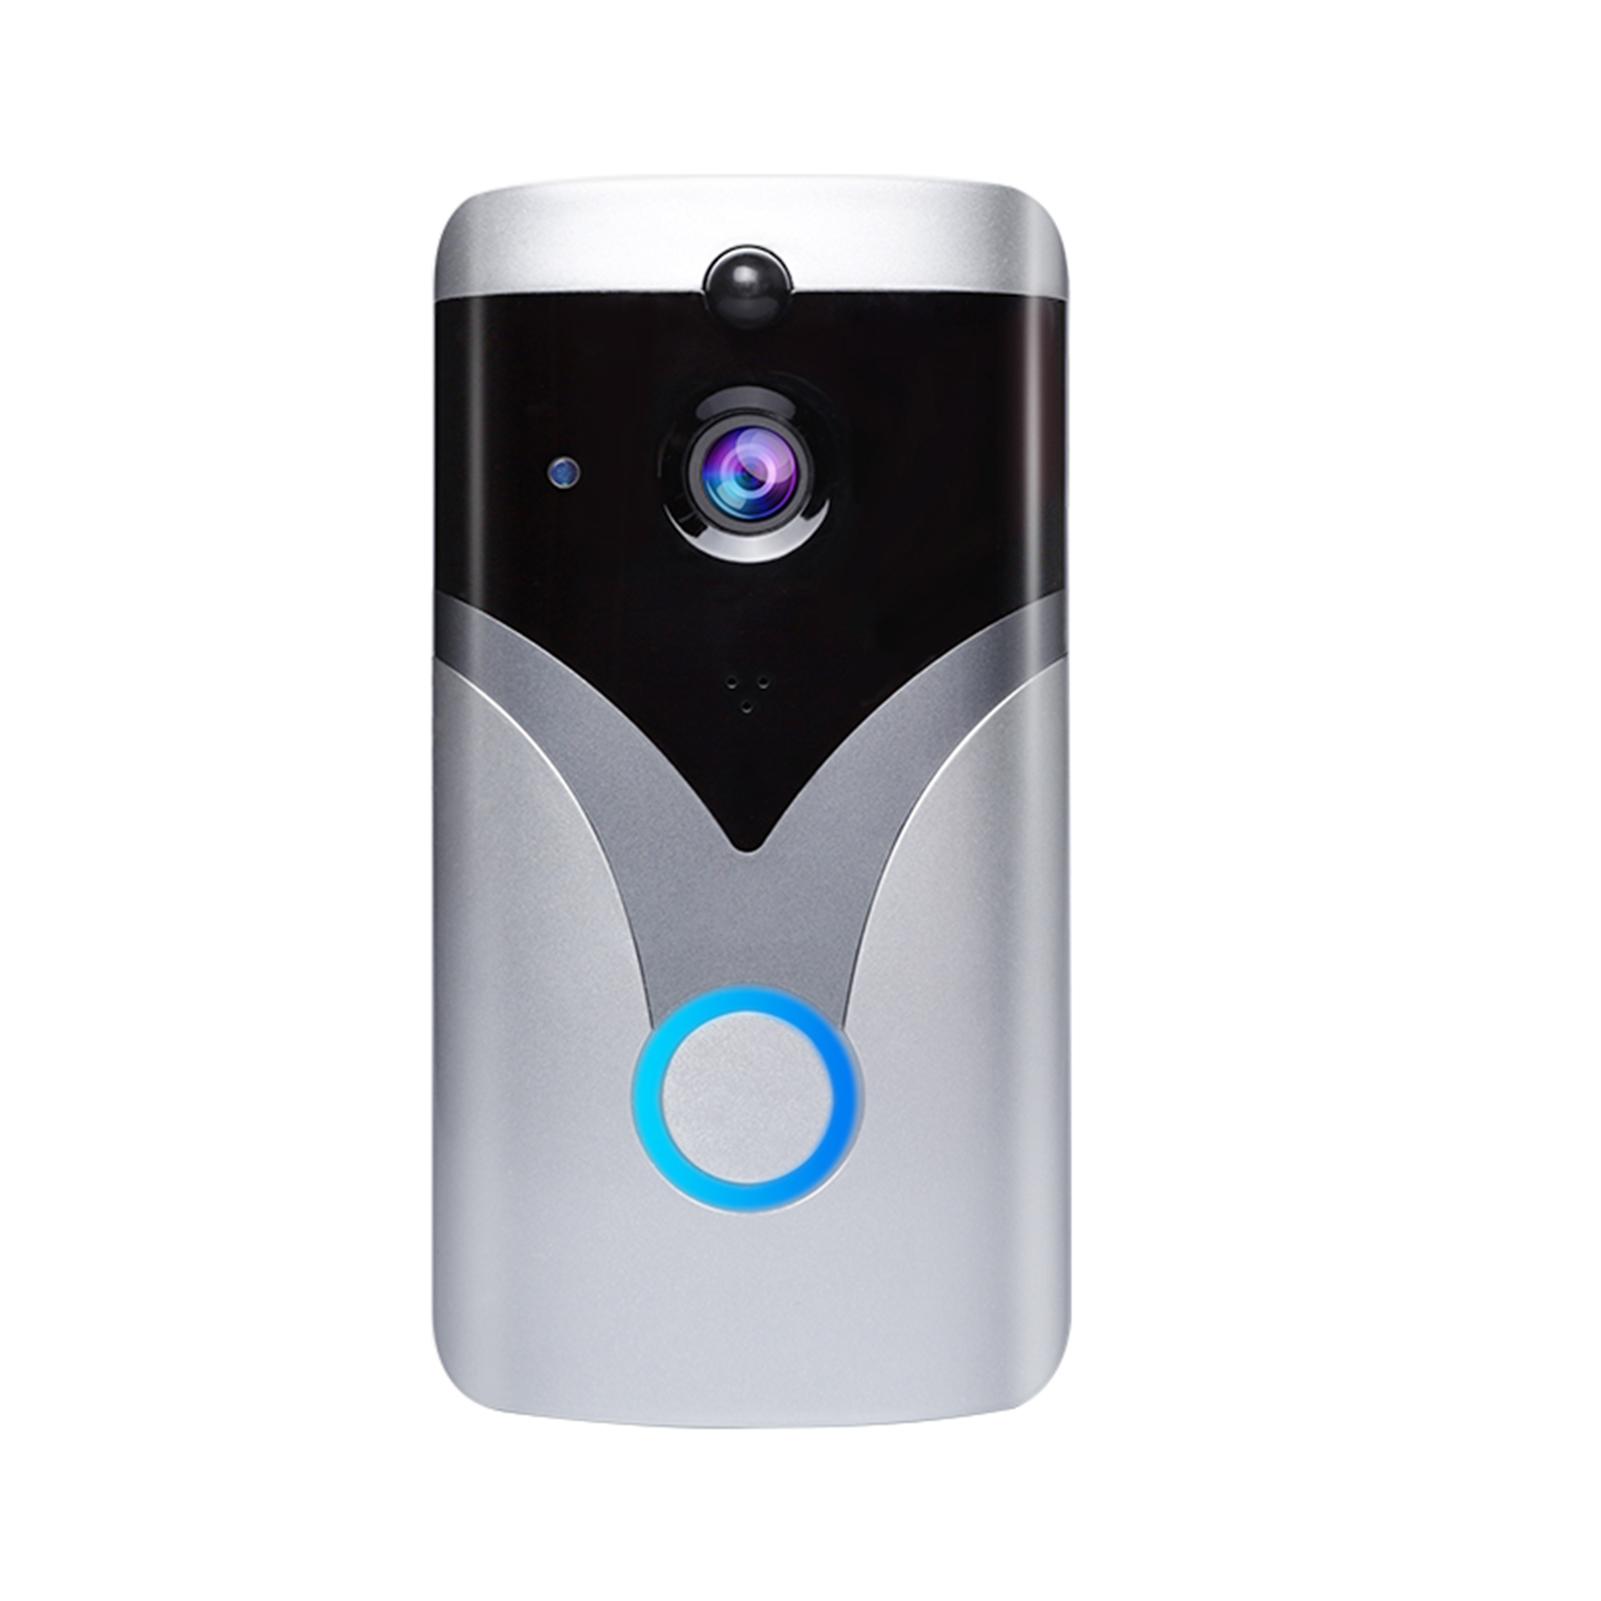 Smart WiFi Video Doorbell Camera 720P Wireless Doorbell Camera with PIR Motion Detection Night Vision 2-Way Audio